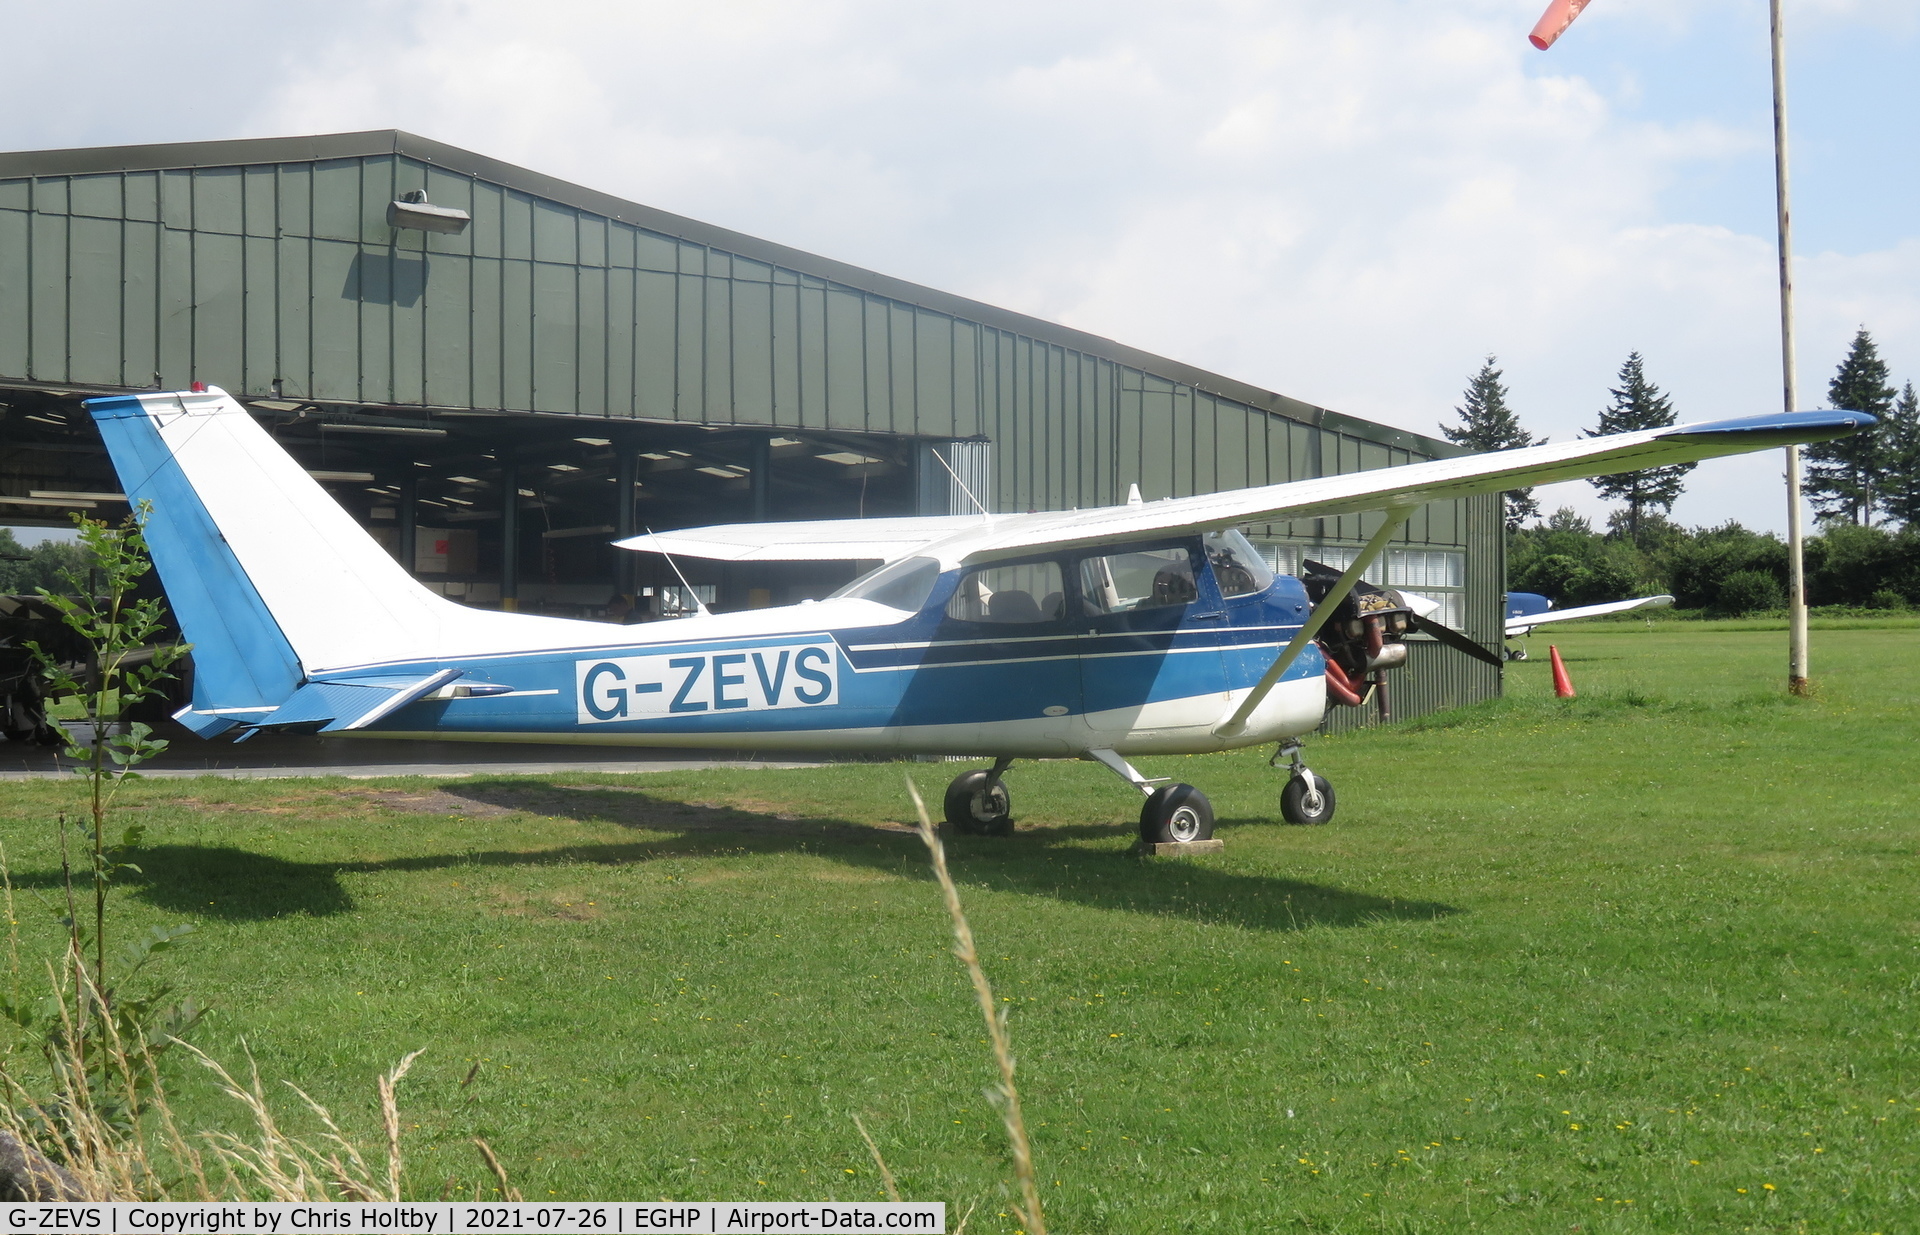 G-ZEVS, 1970 Reims F172H Skyhawk C/N F17200736, Parked at its base at Popham Airfield Hants.